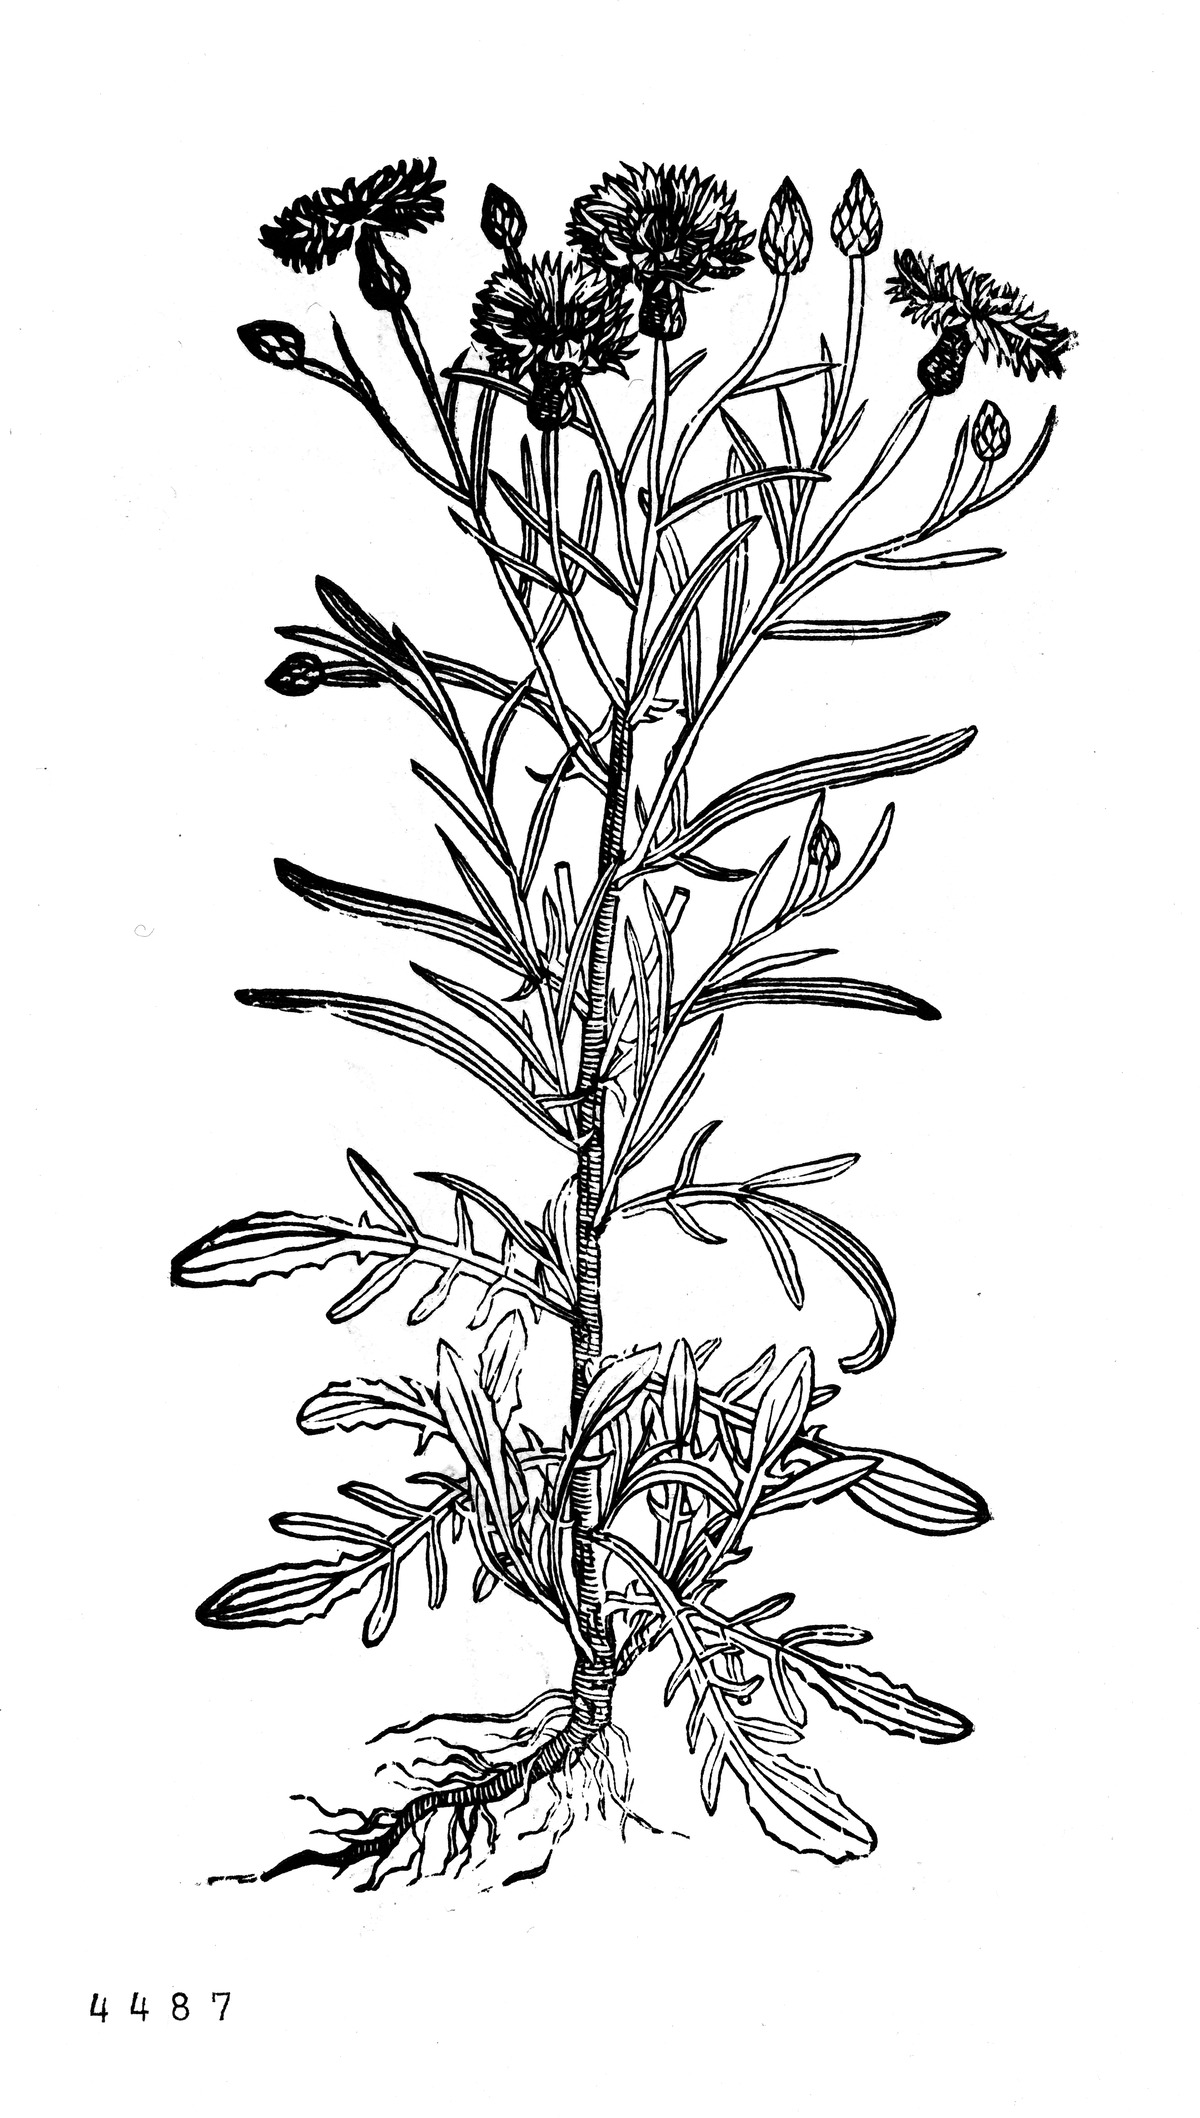 Korenbloem; wilde korenbloem; roggebloem [Centaurea cyanus]